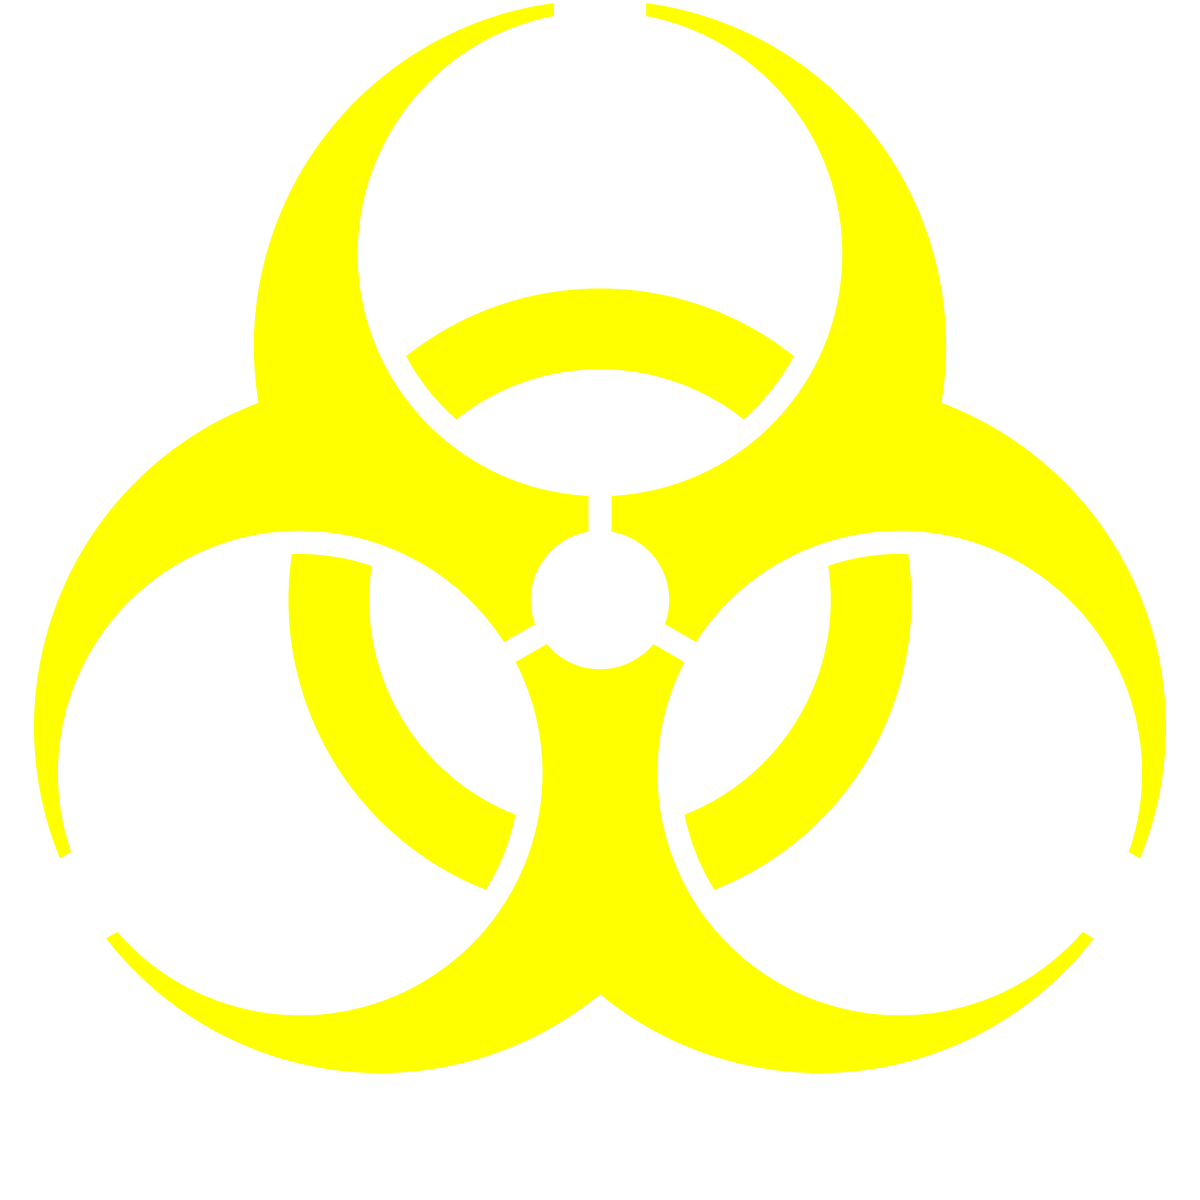 Cool Biohazard Symbol PNG Image Background